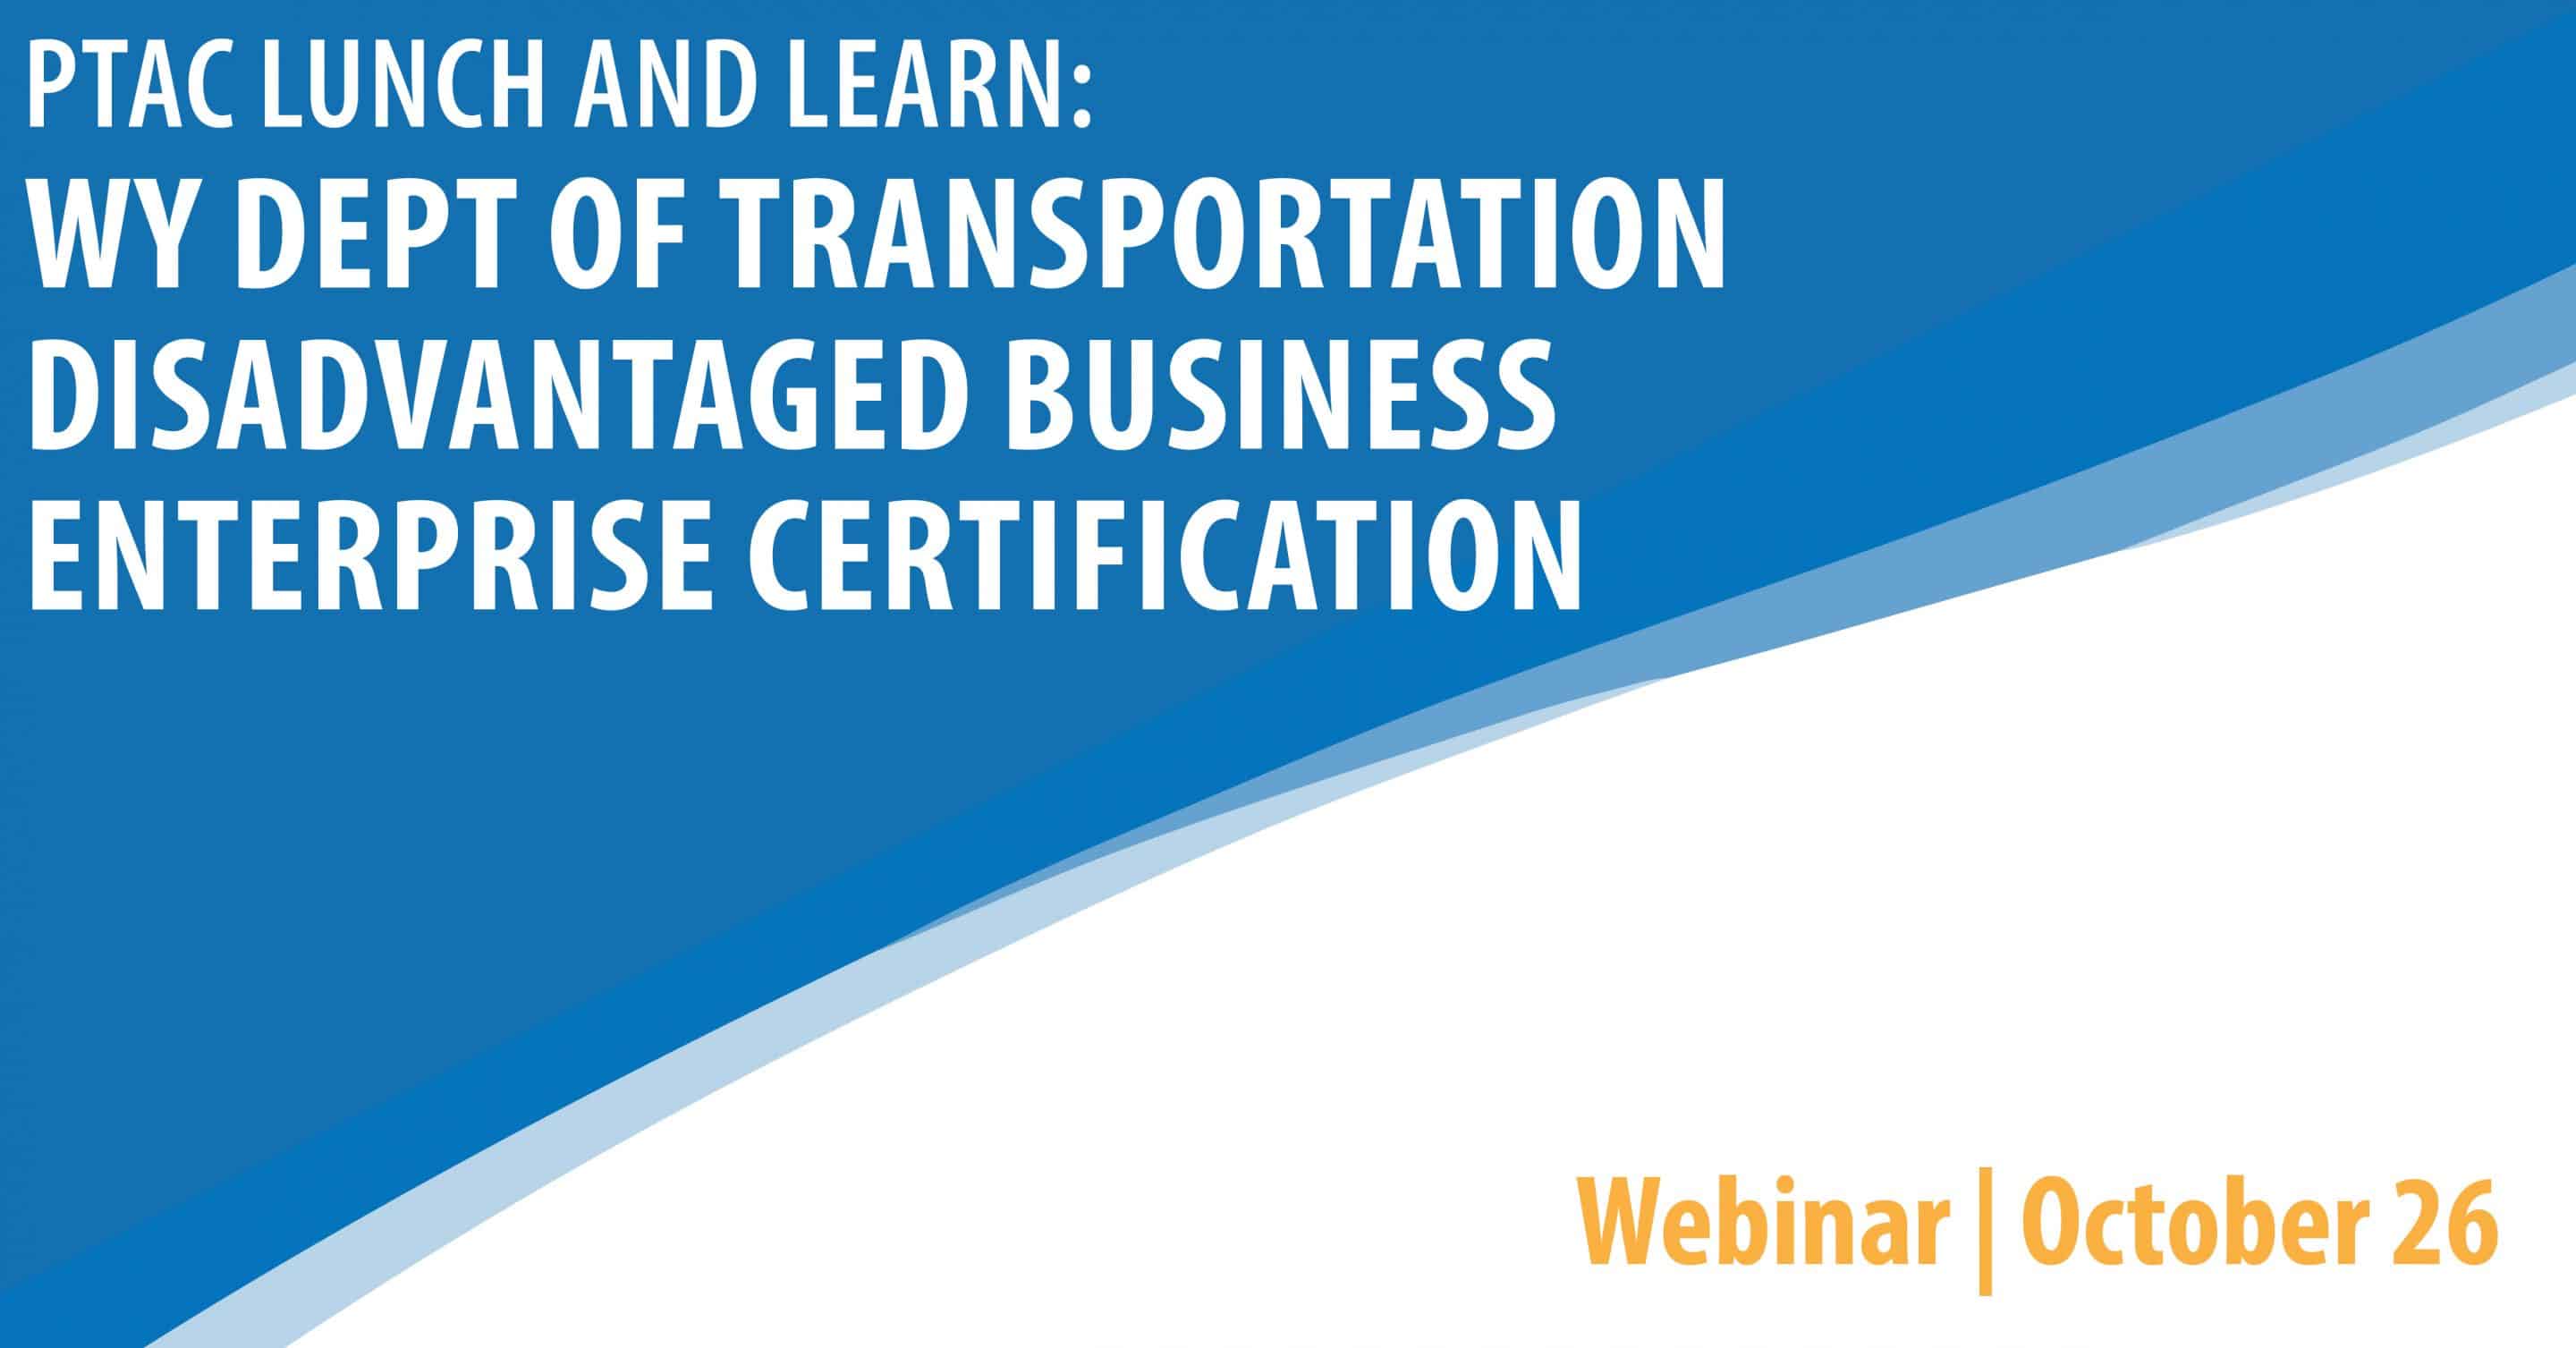 PTAC Lunch and Learn: WY Dept of Transportation Disadvantaged Business Enterprise Certification